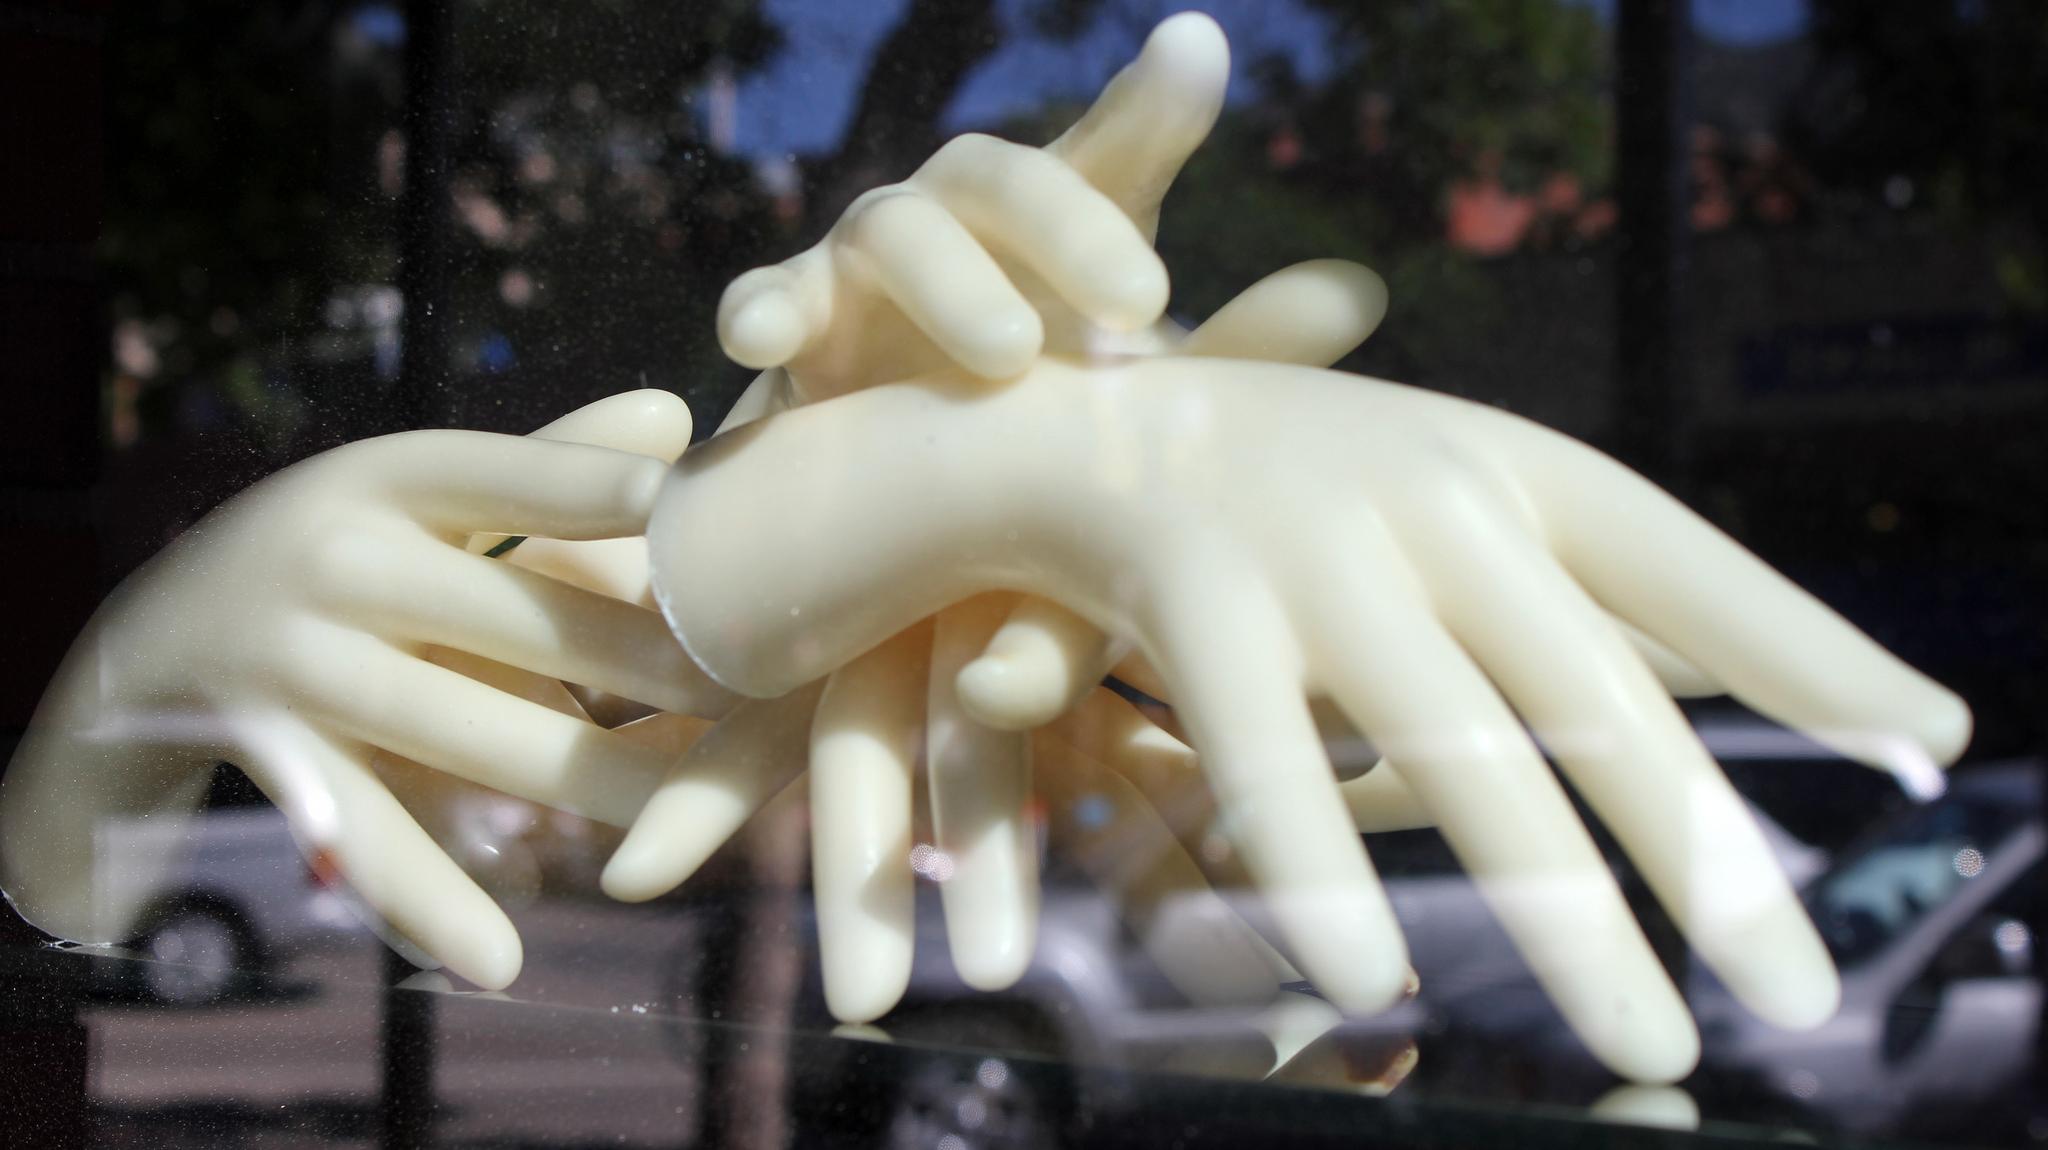 Загребущие руки (инсталляция) [(cc) Quinn Dombrowski]